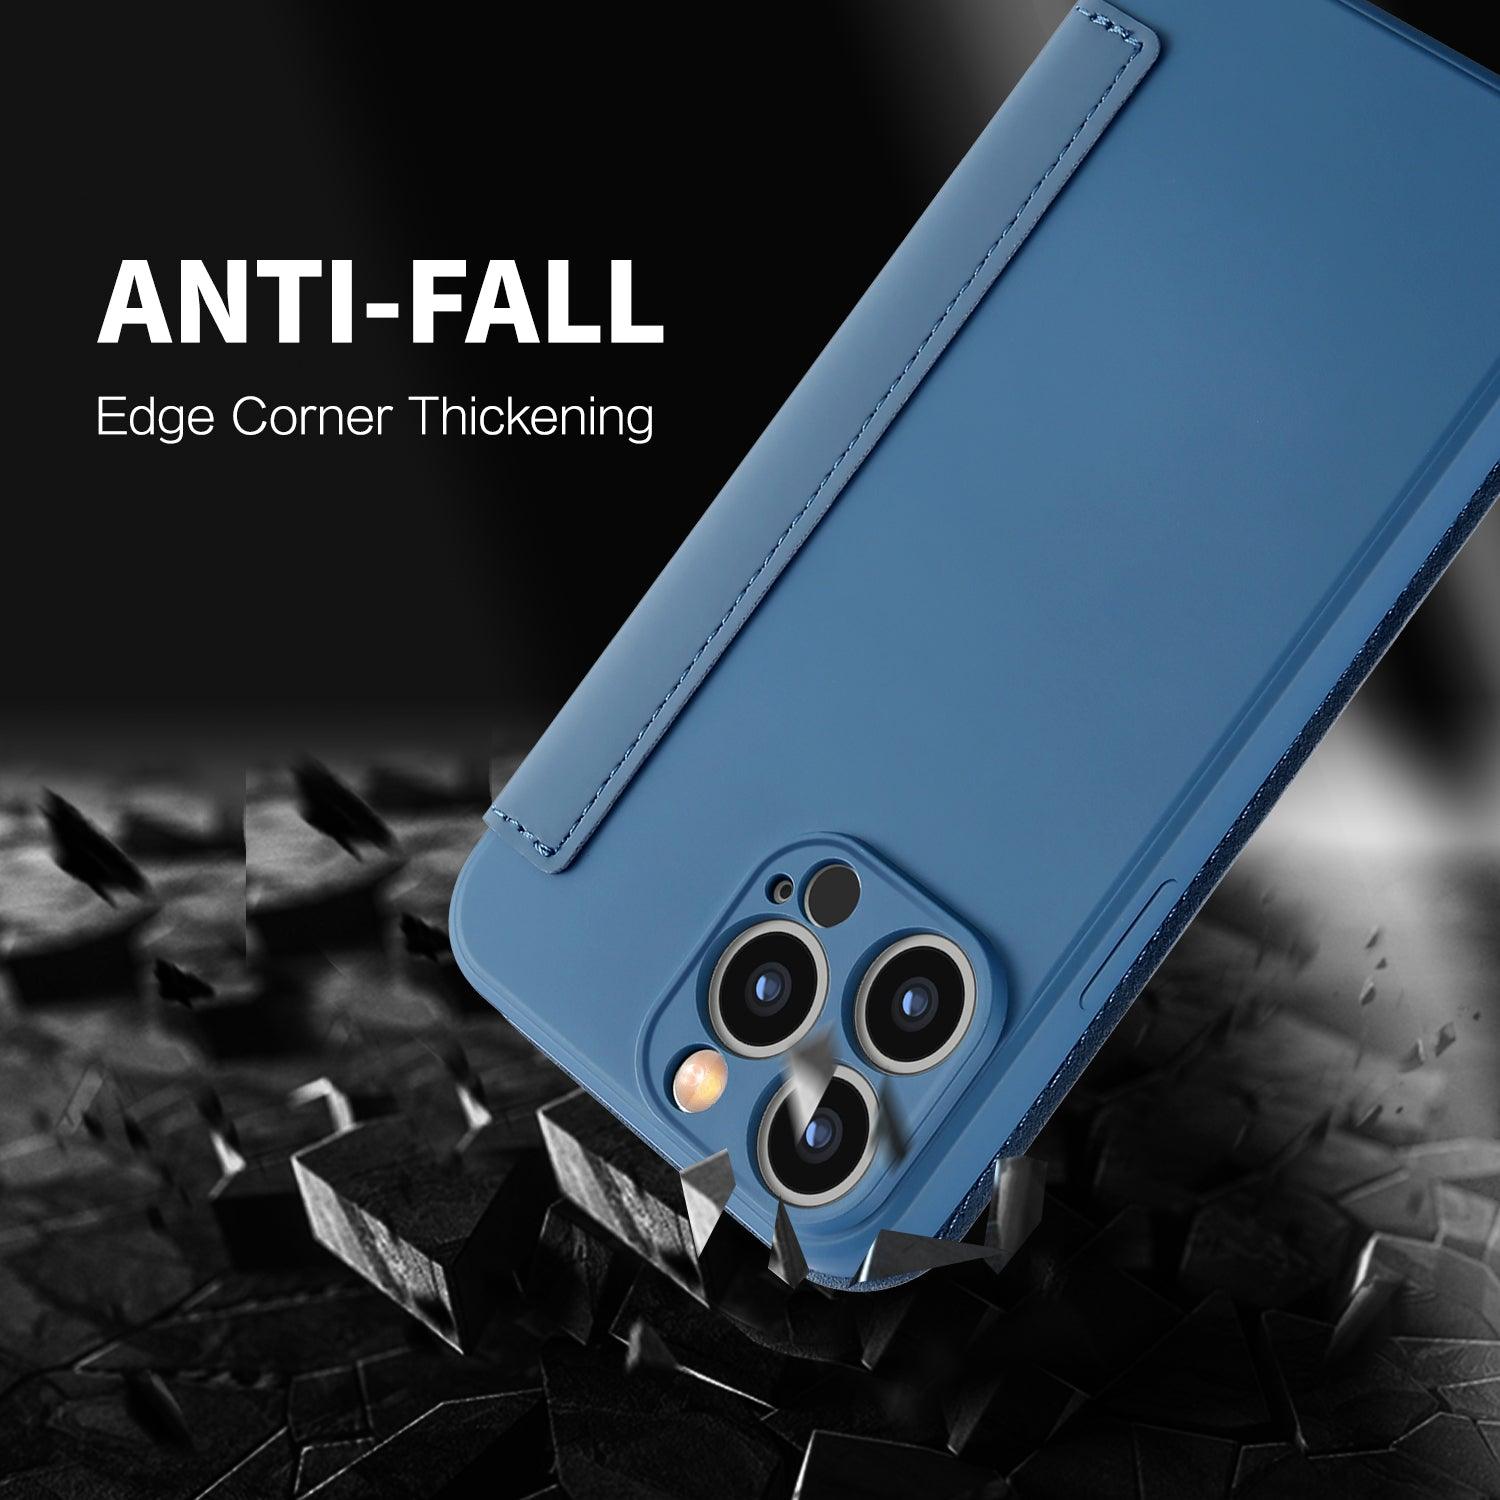 Liquid Skin Feel Leather Phone Case - Aumoo